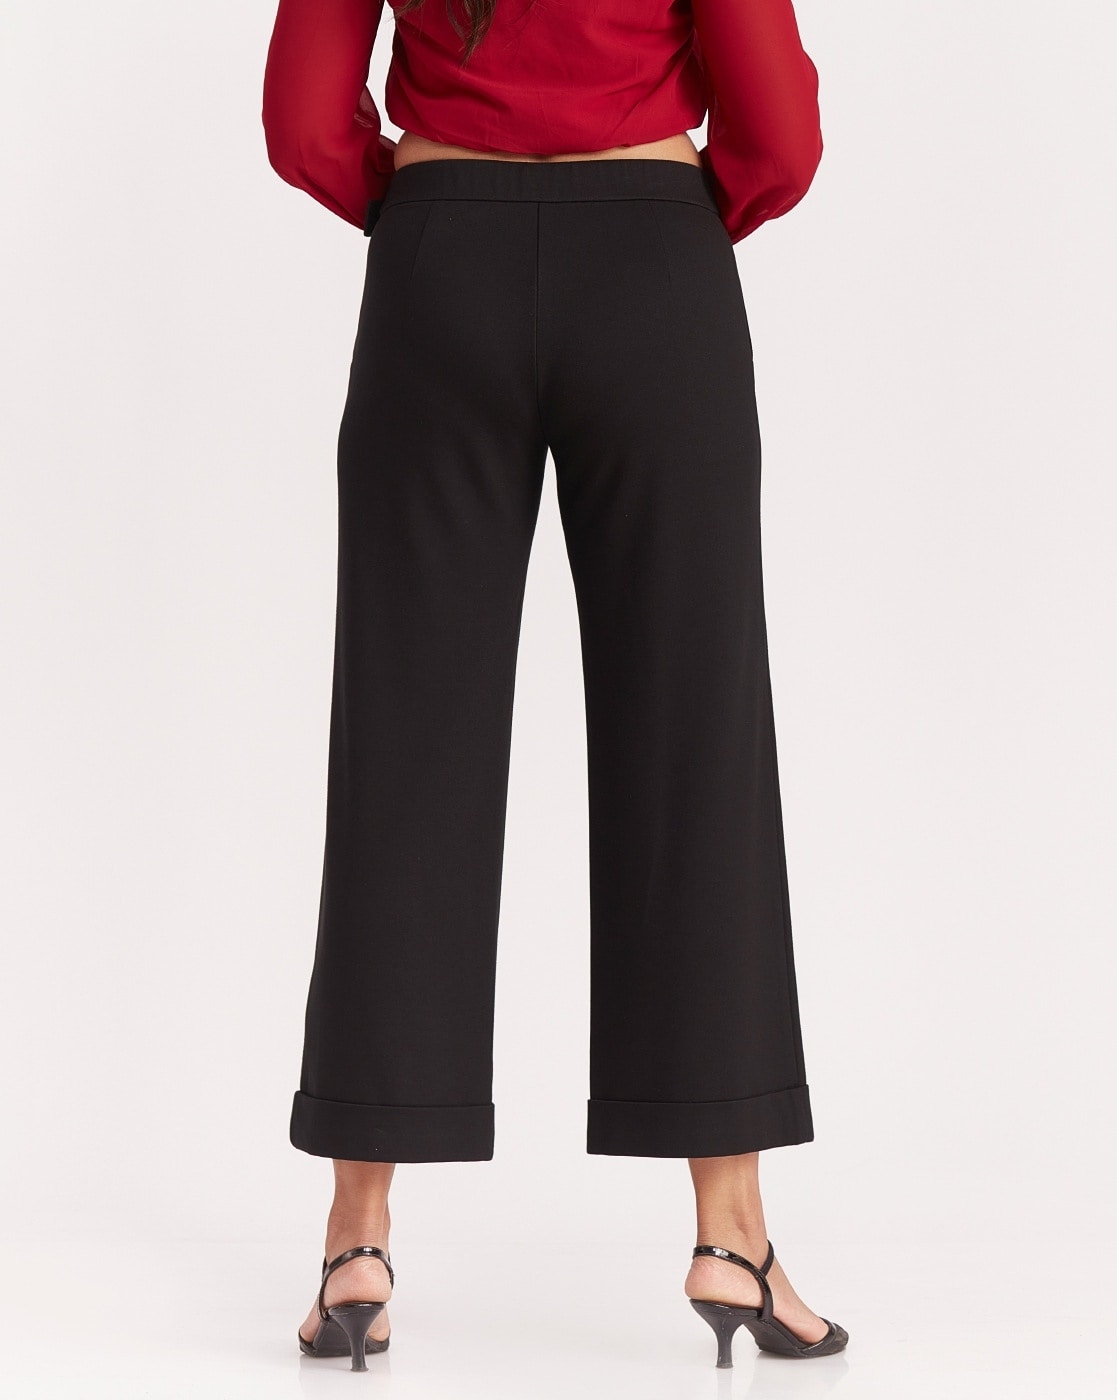 Buy Women Black Solid Formal Regular Fit Trousers Online  681206  Van  Heusen